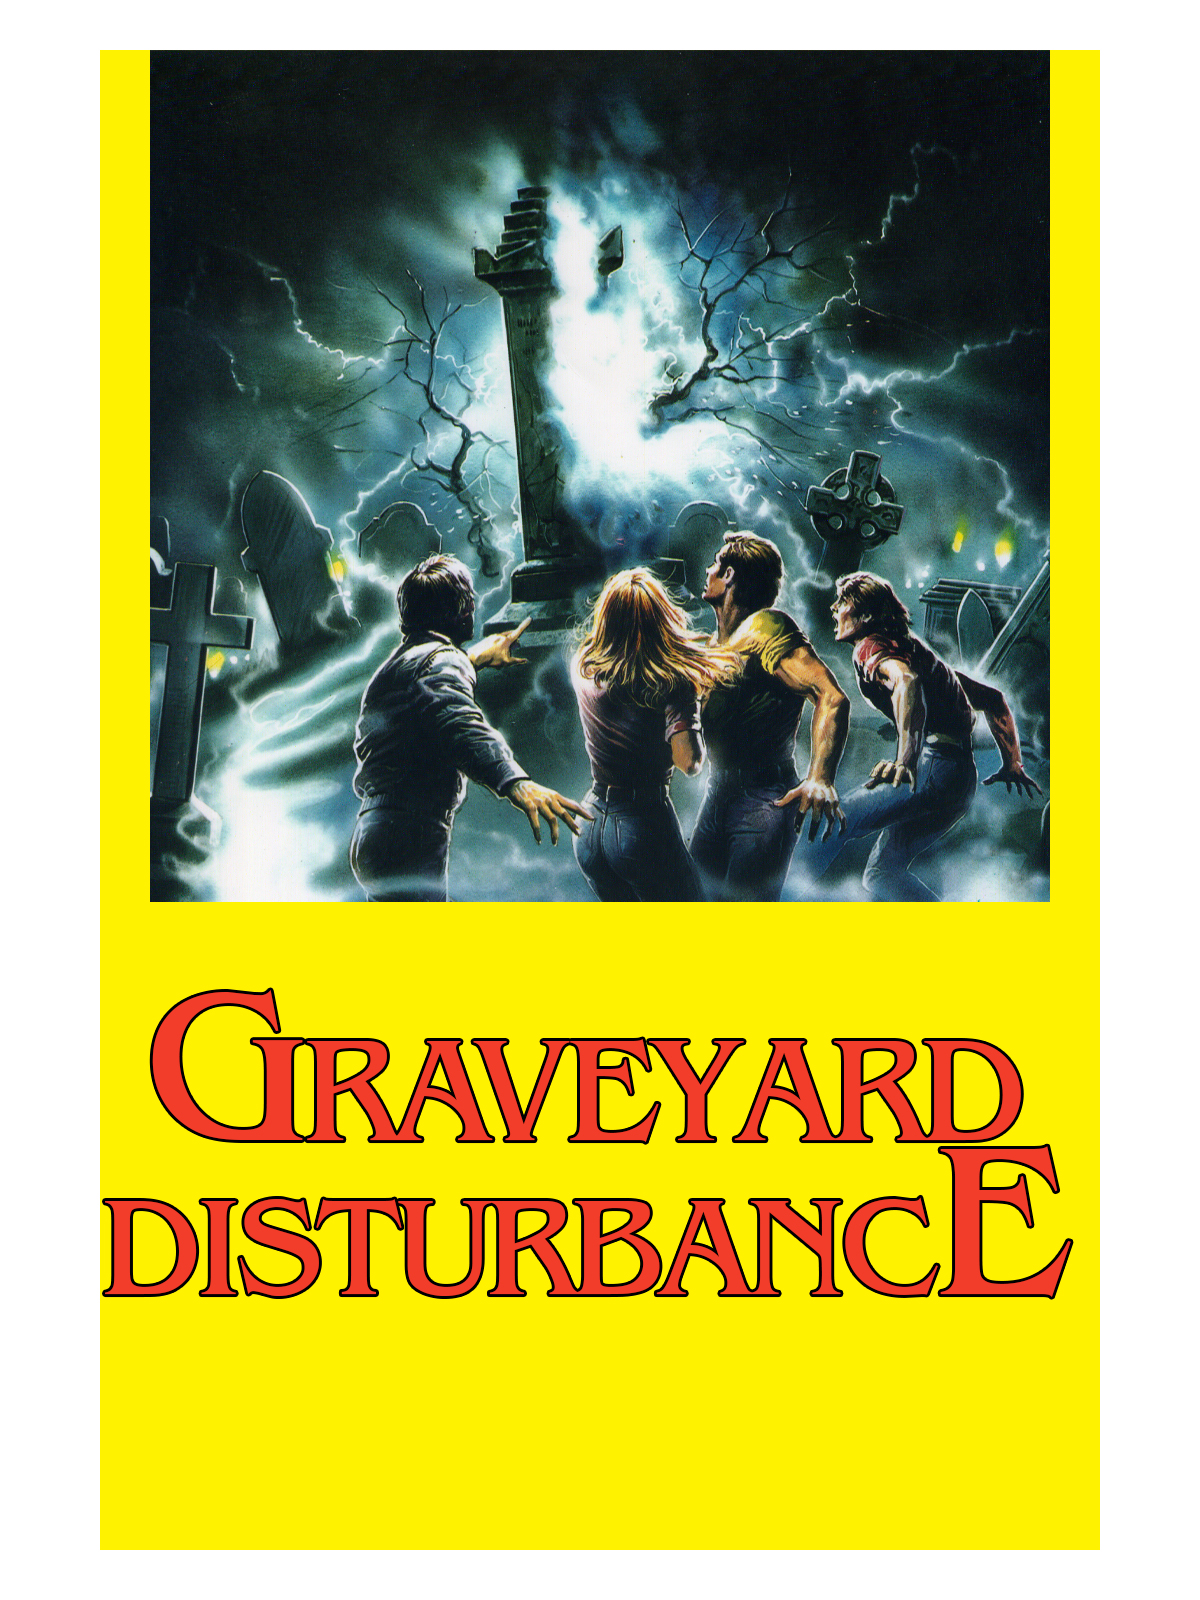 Graveyard Disturbance